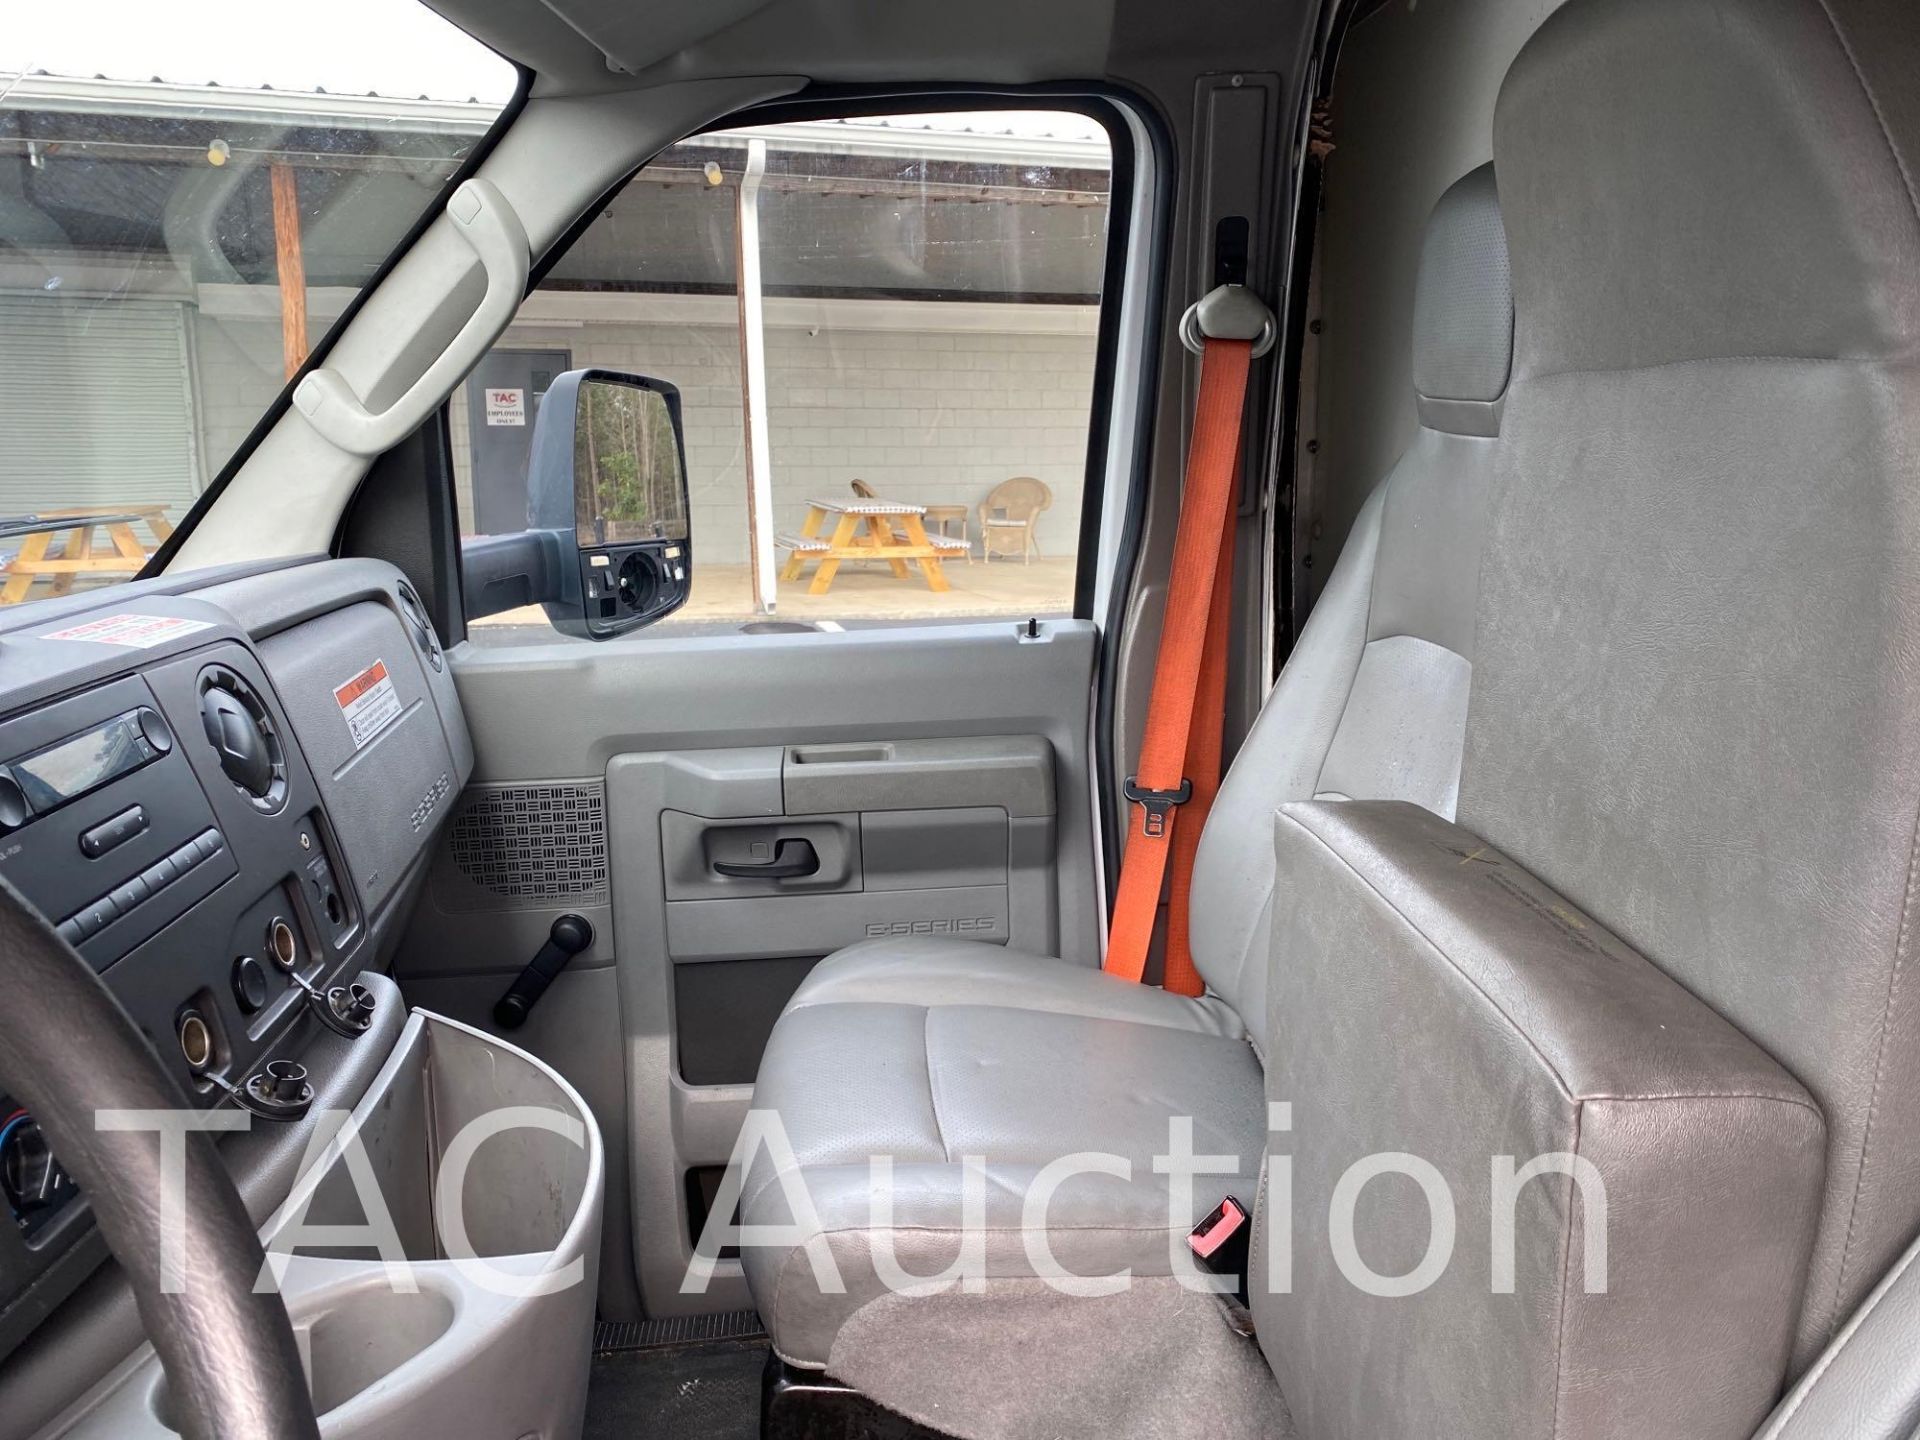 2015 Ford Econoline E-350 16ft Box Truck - Image 9 of 50